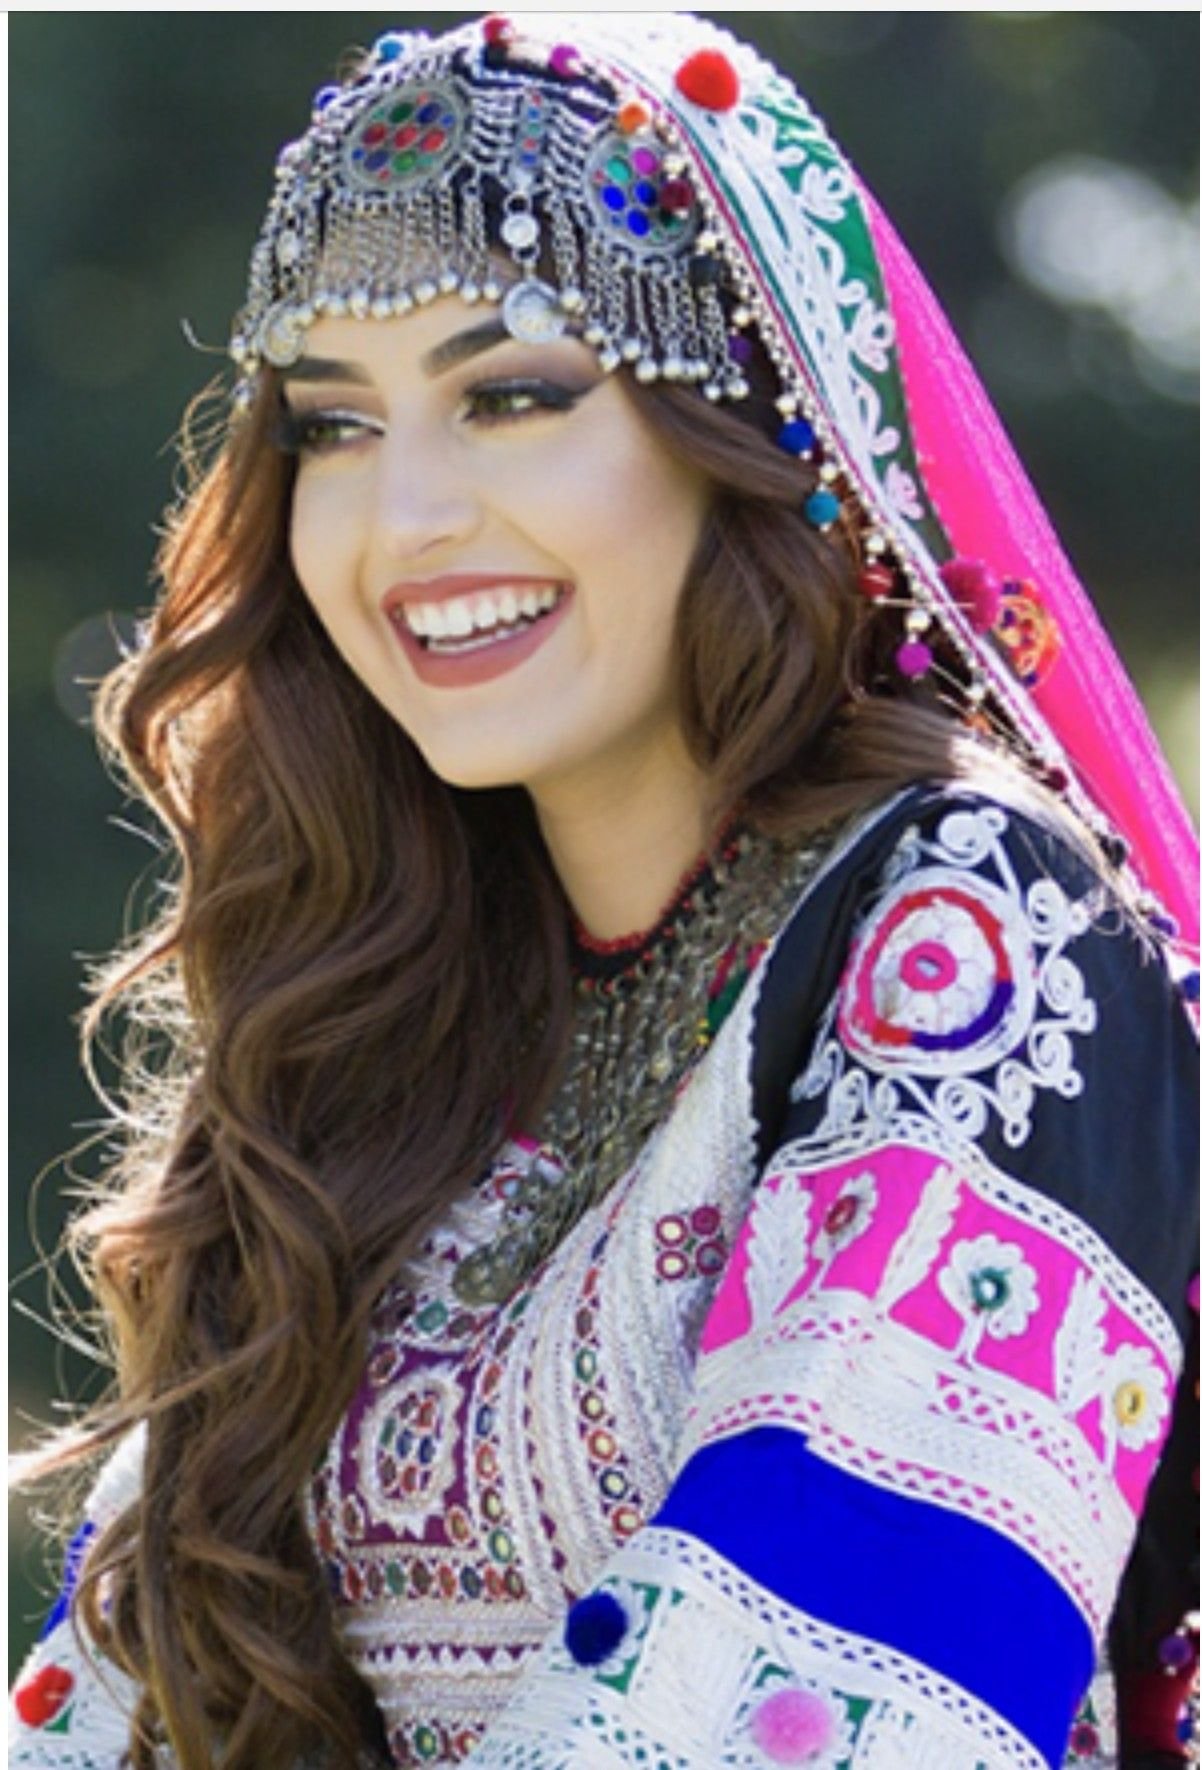 Таджикские модели. Гульбахар Бекназар. Певица Зебо. Гульбазар Бекназар модель. Красивые таджикские девушки.